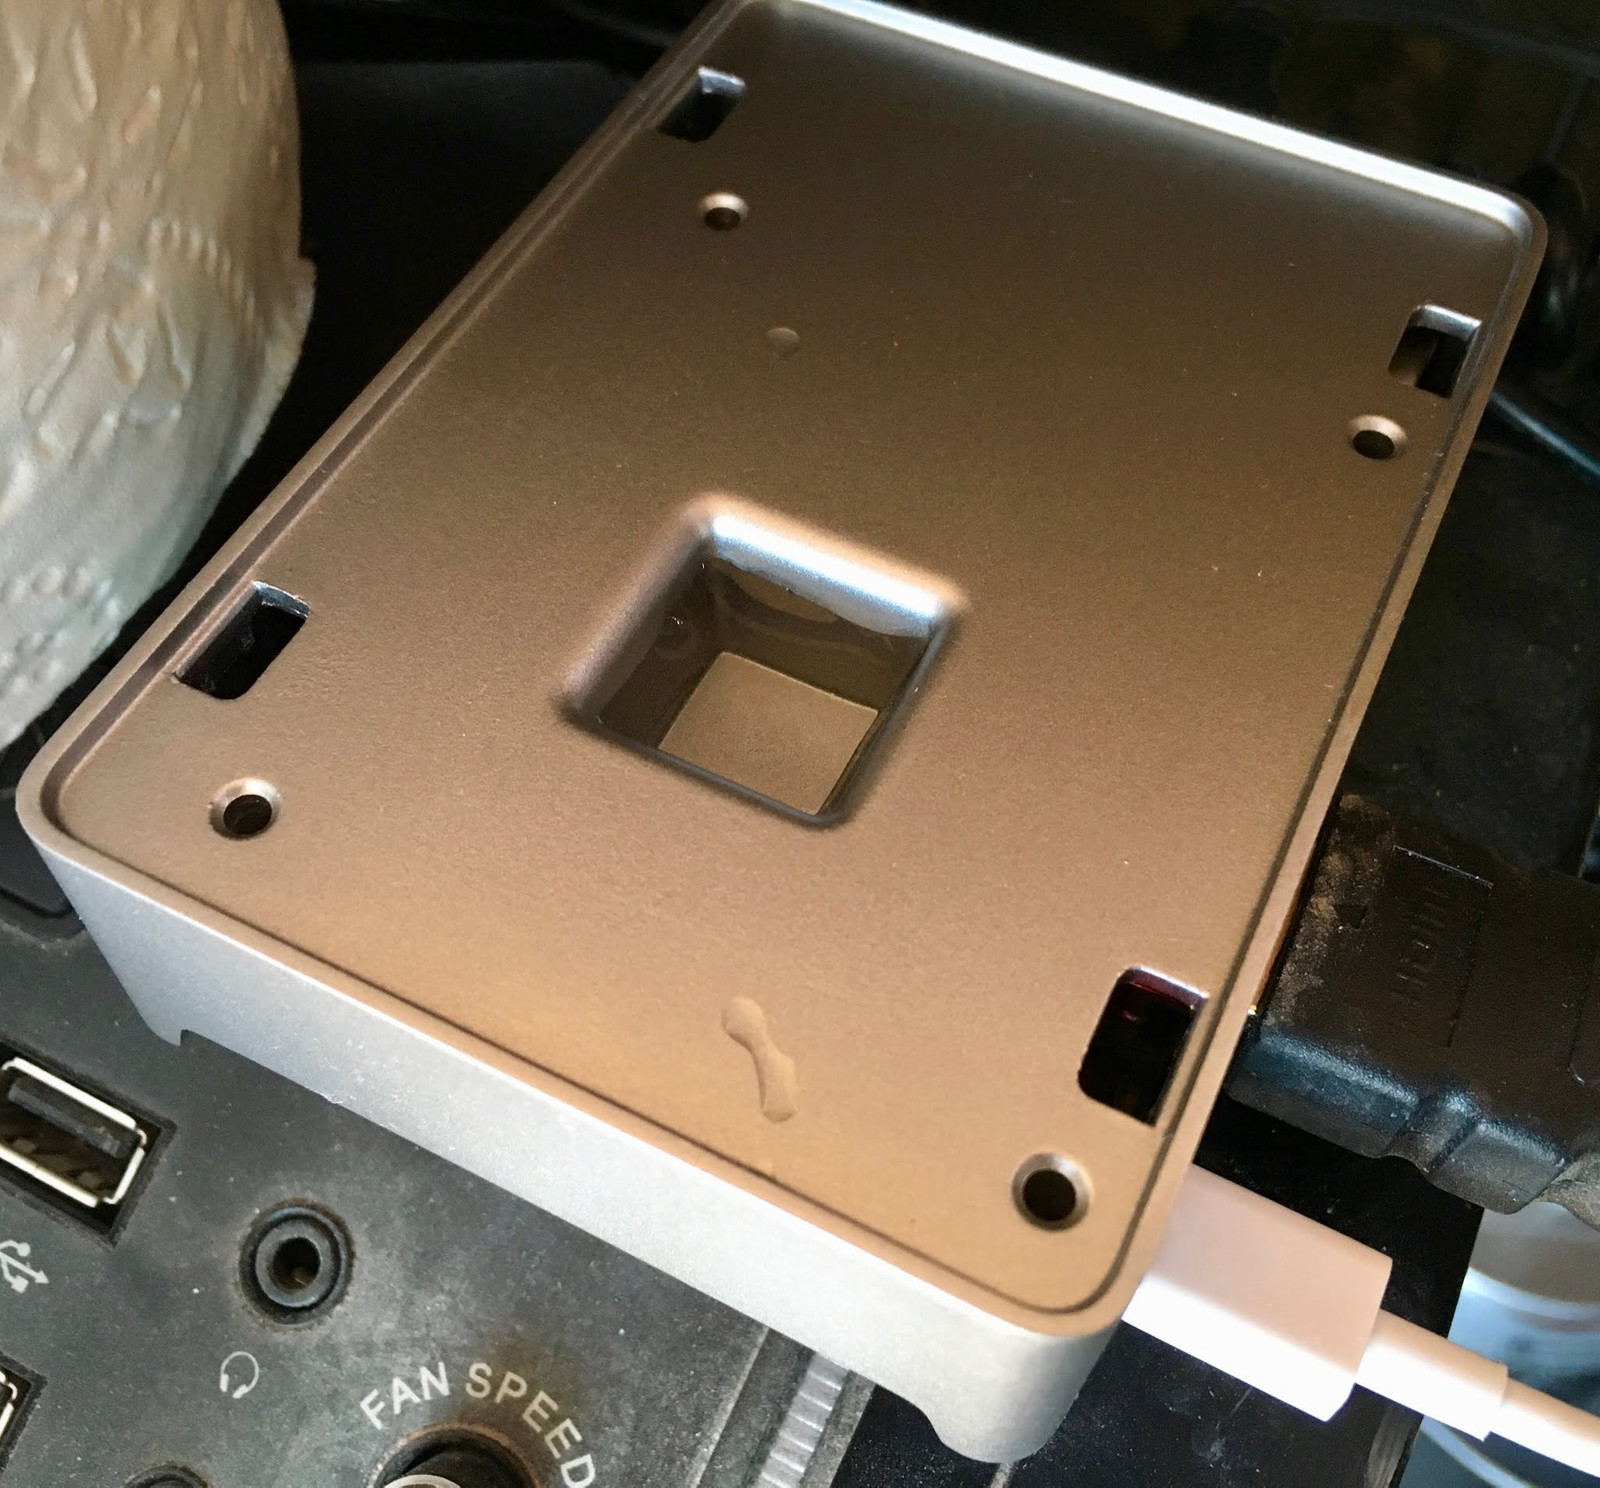 Flirc Raspberry Pi 4 Case (Silver)